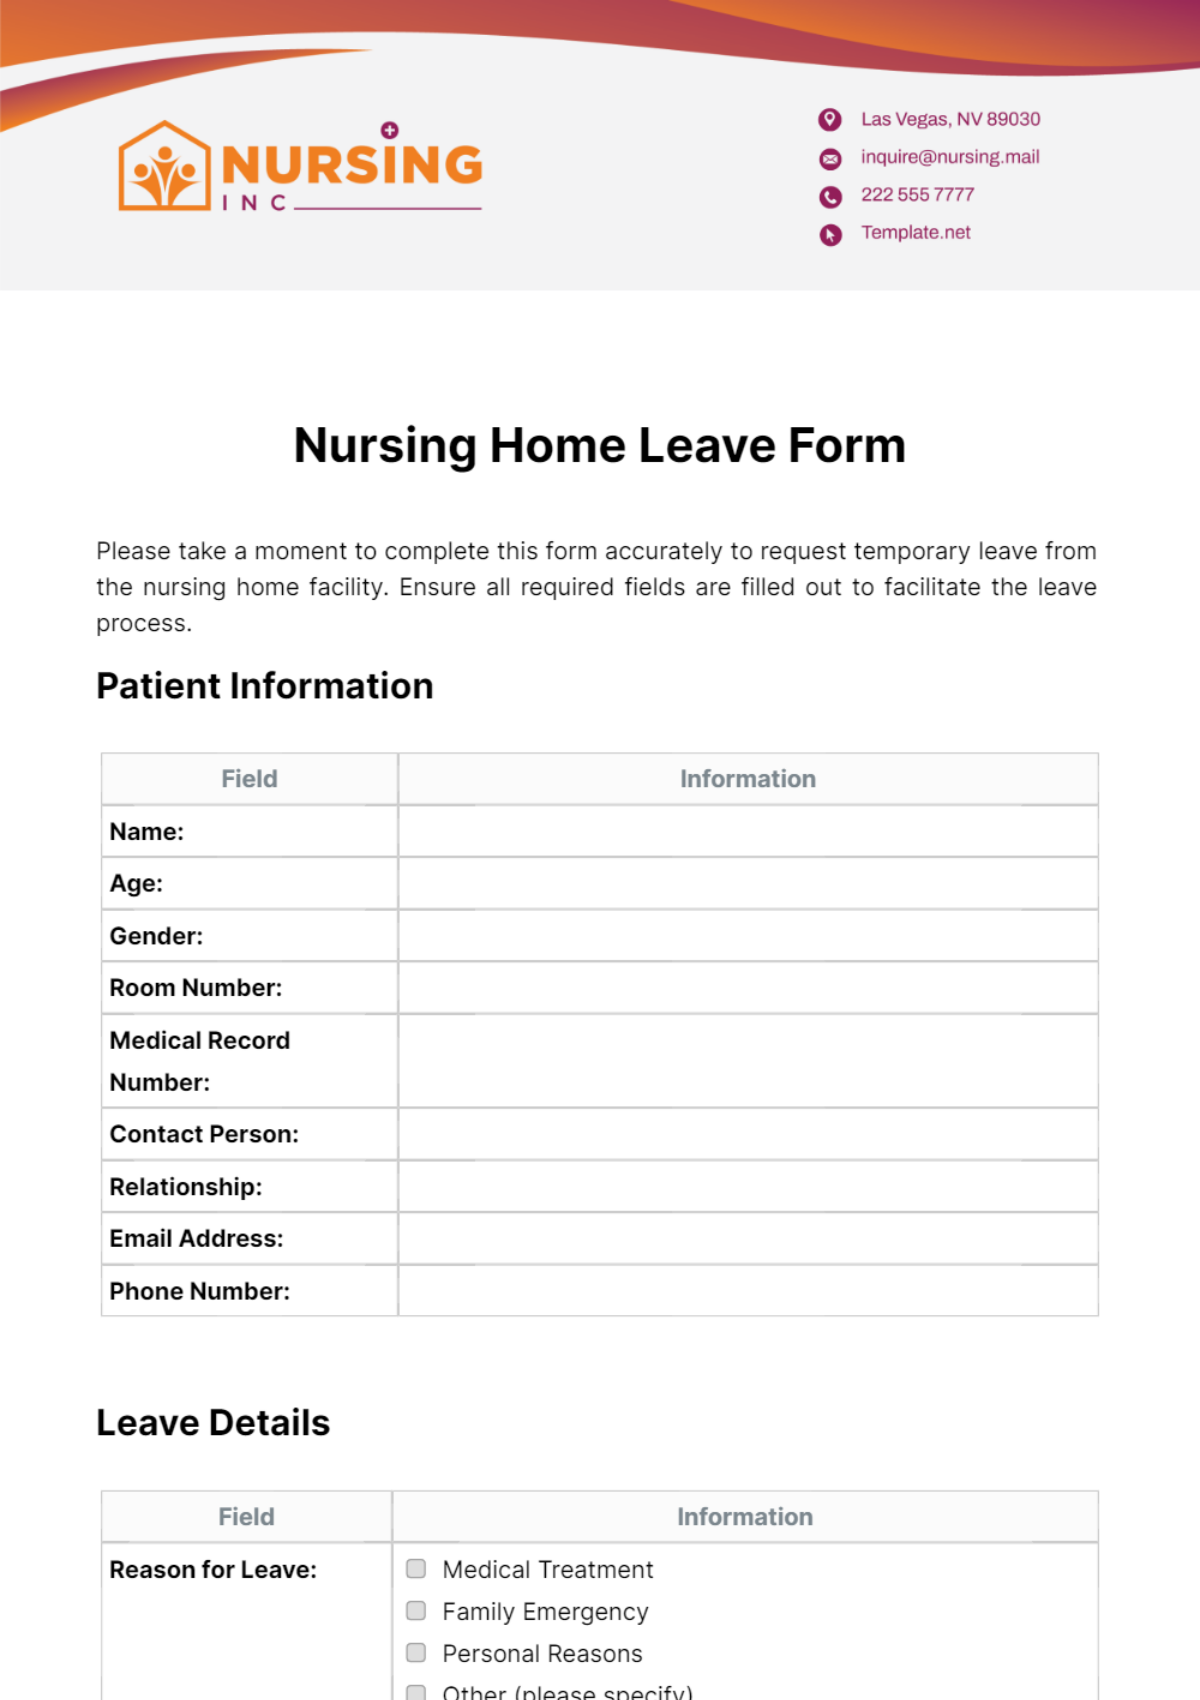 Nursing Home Leave Form Template